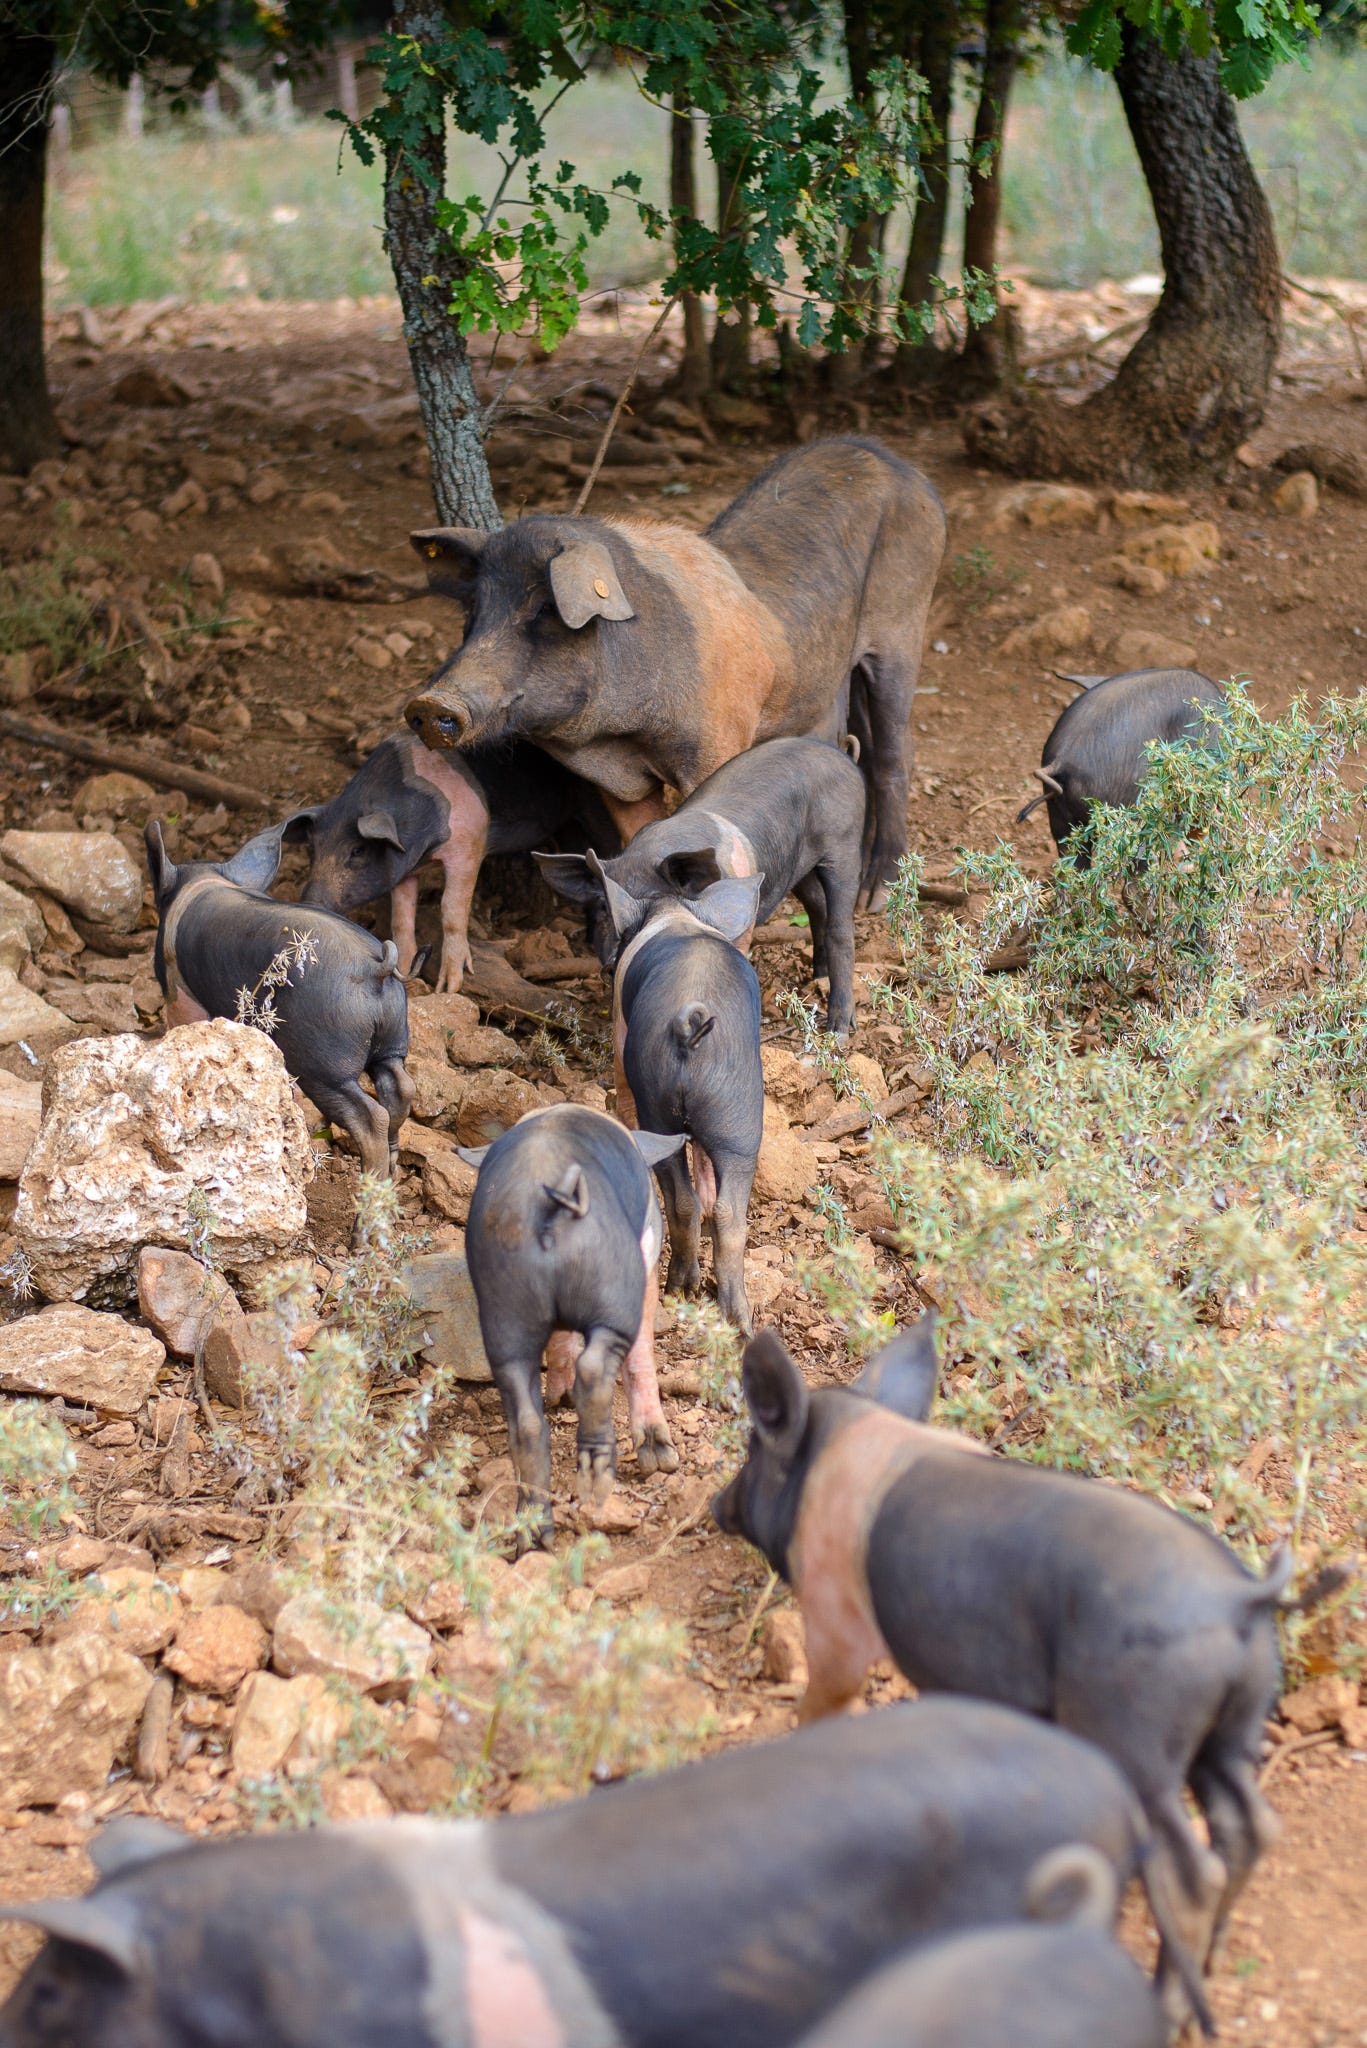 Cinte Senese pigs in Tuscany